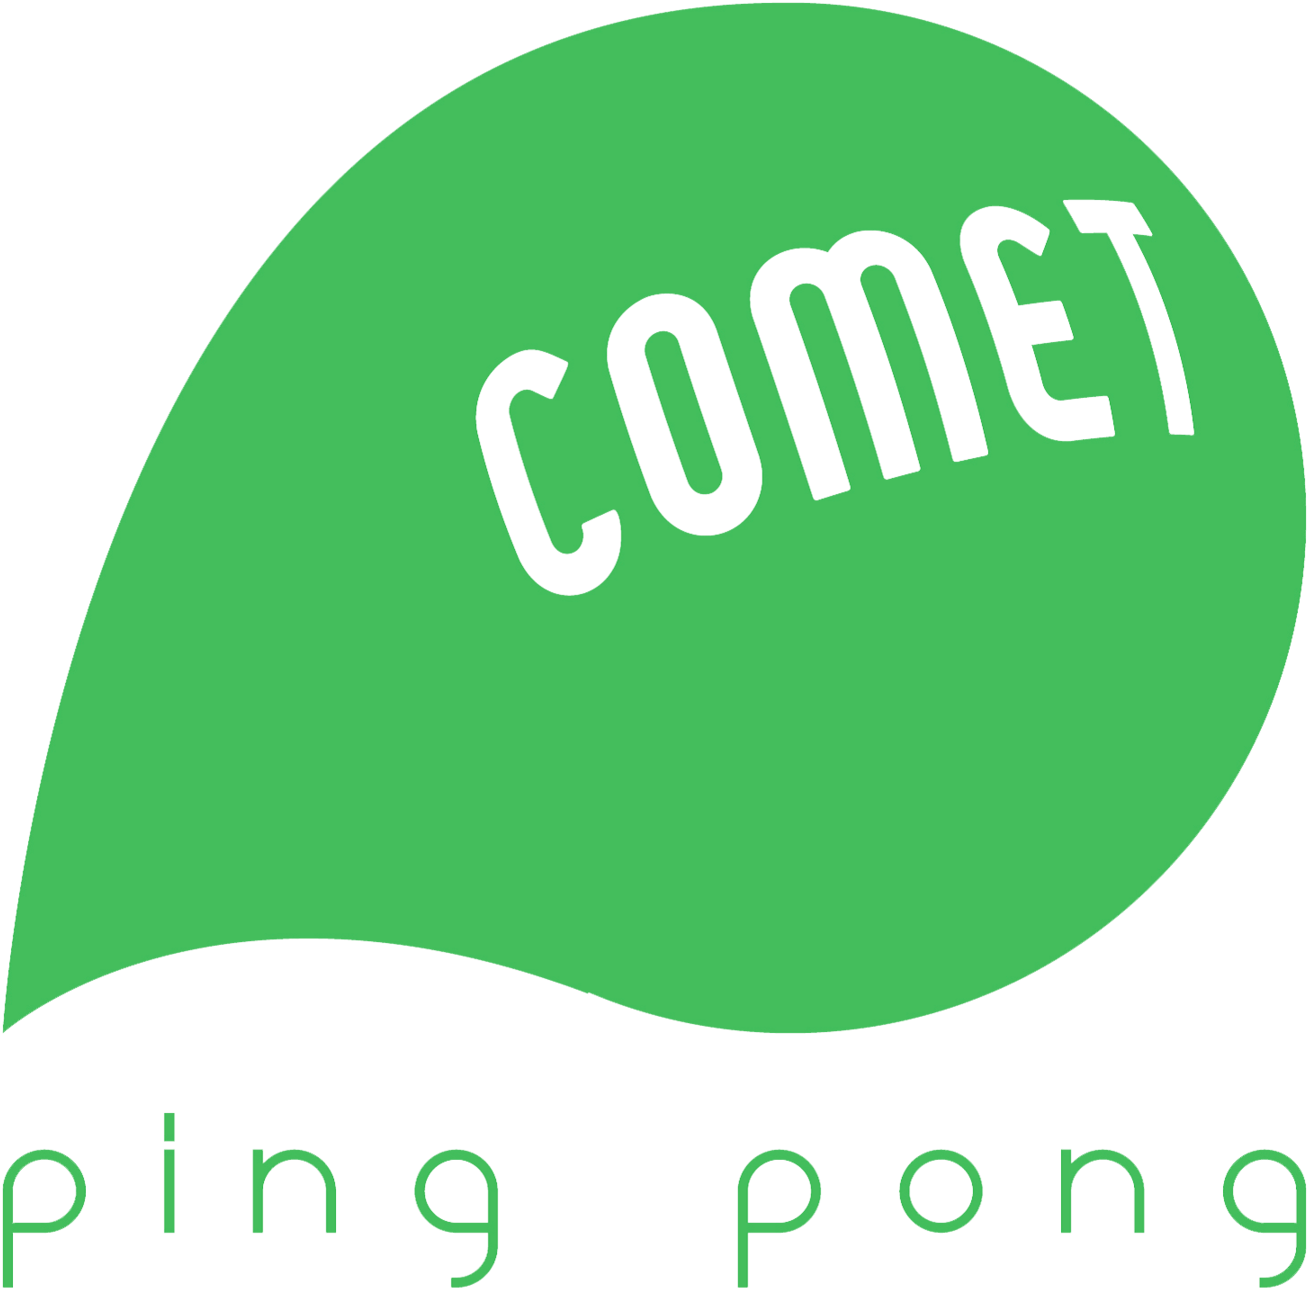 Comet Ping Pong Logo PNG image